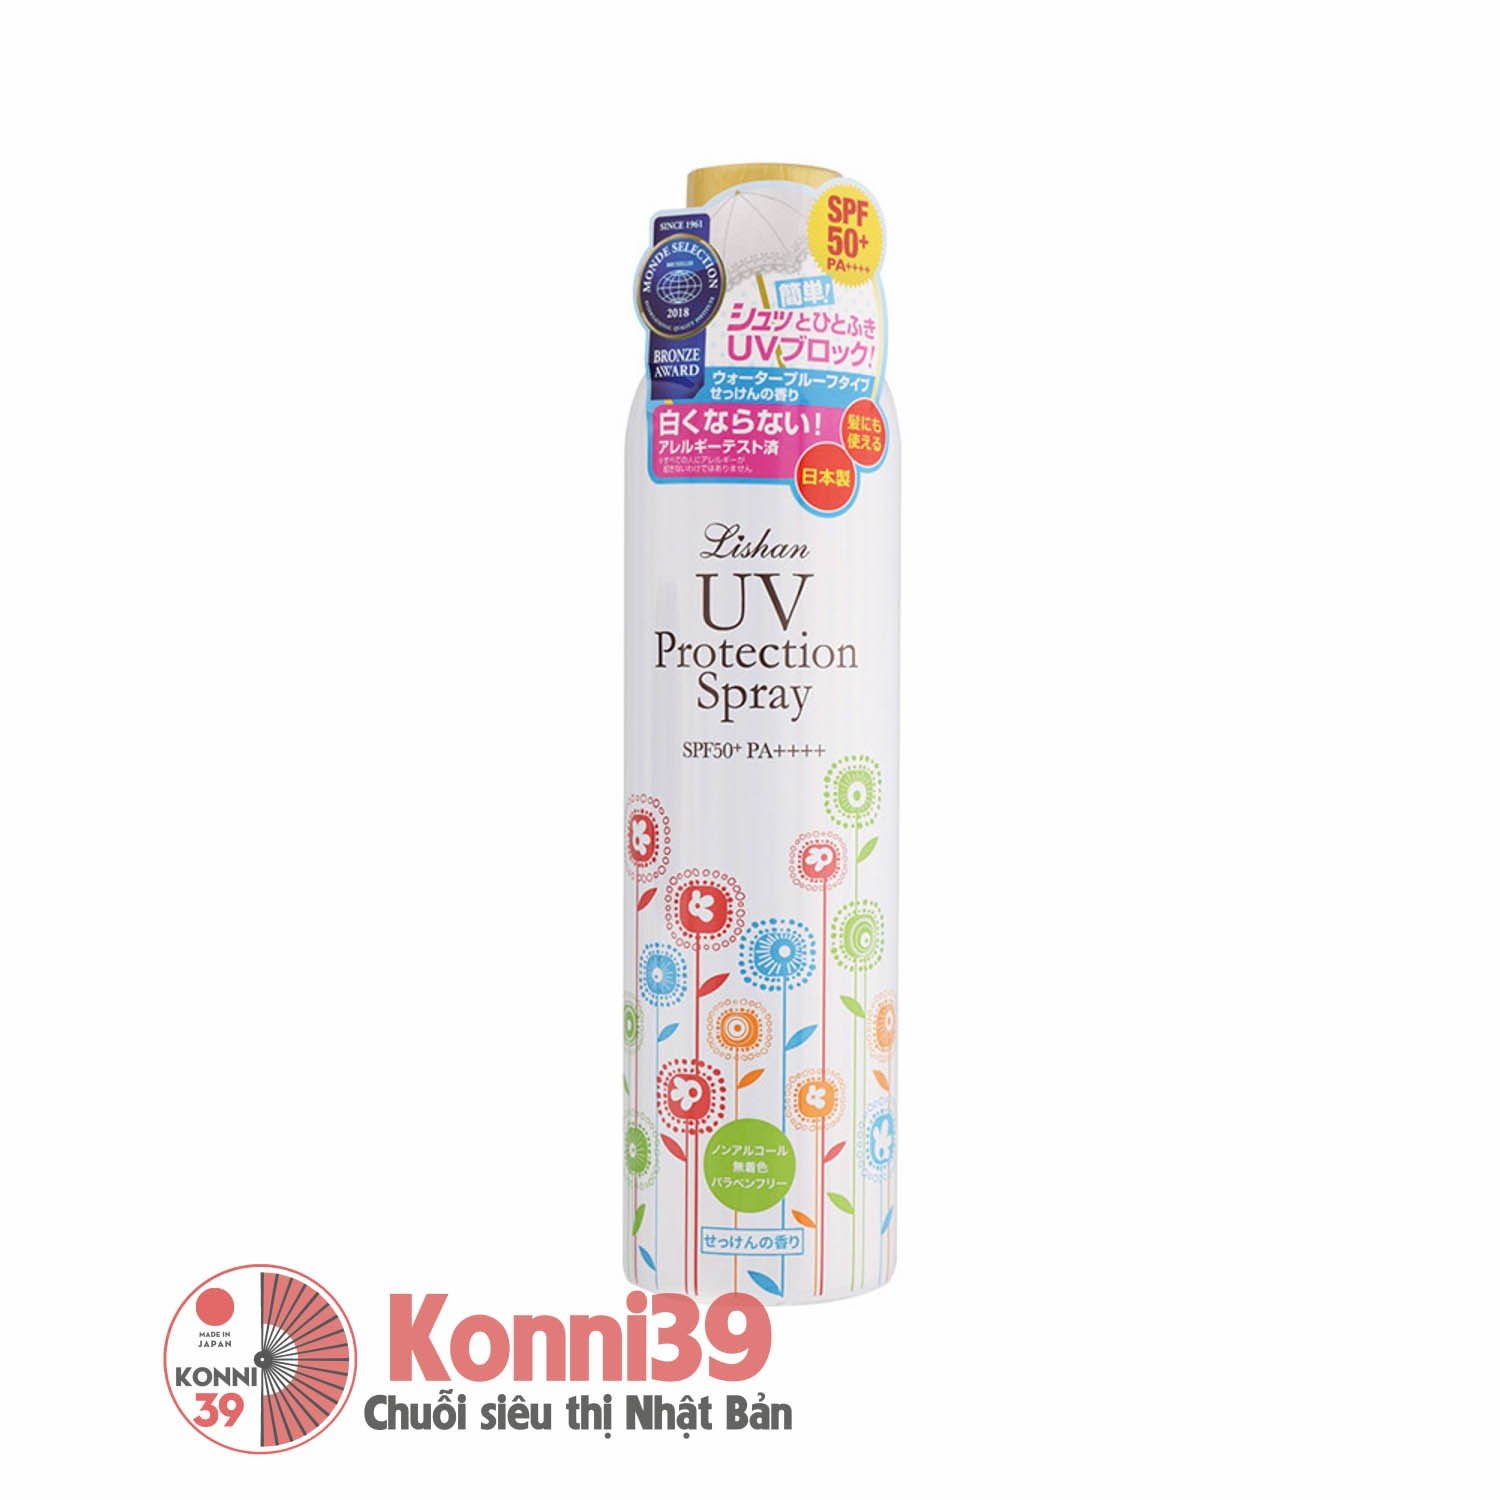 Xịt chống nắng Lishan UV Protection Spray SPF50 PA++++ 150g